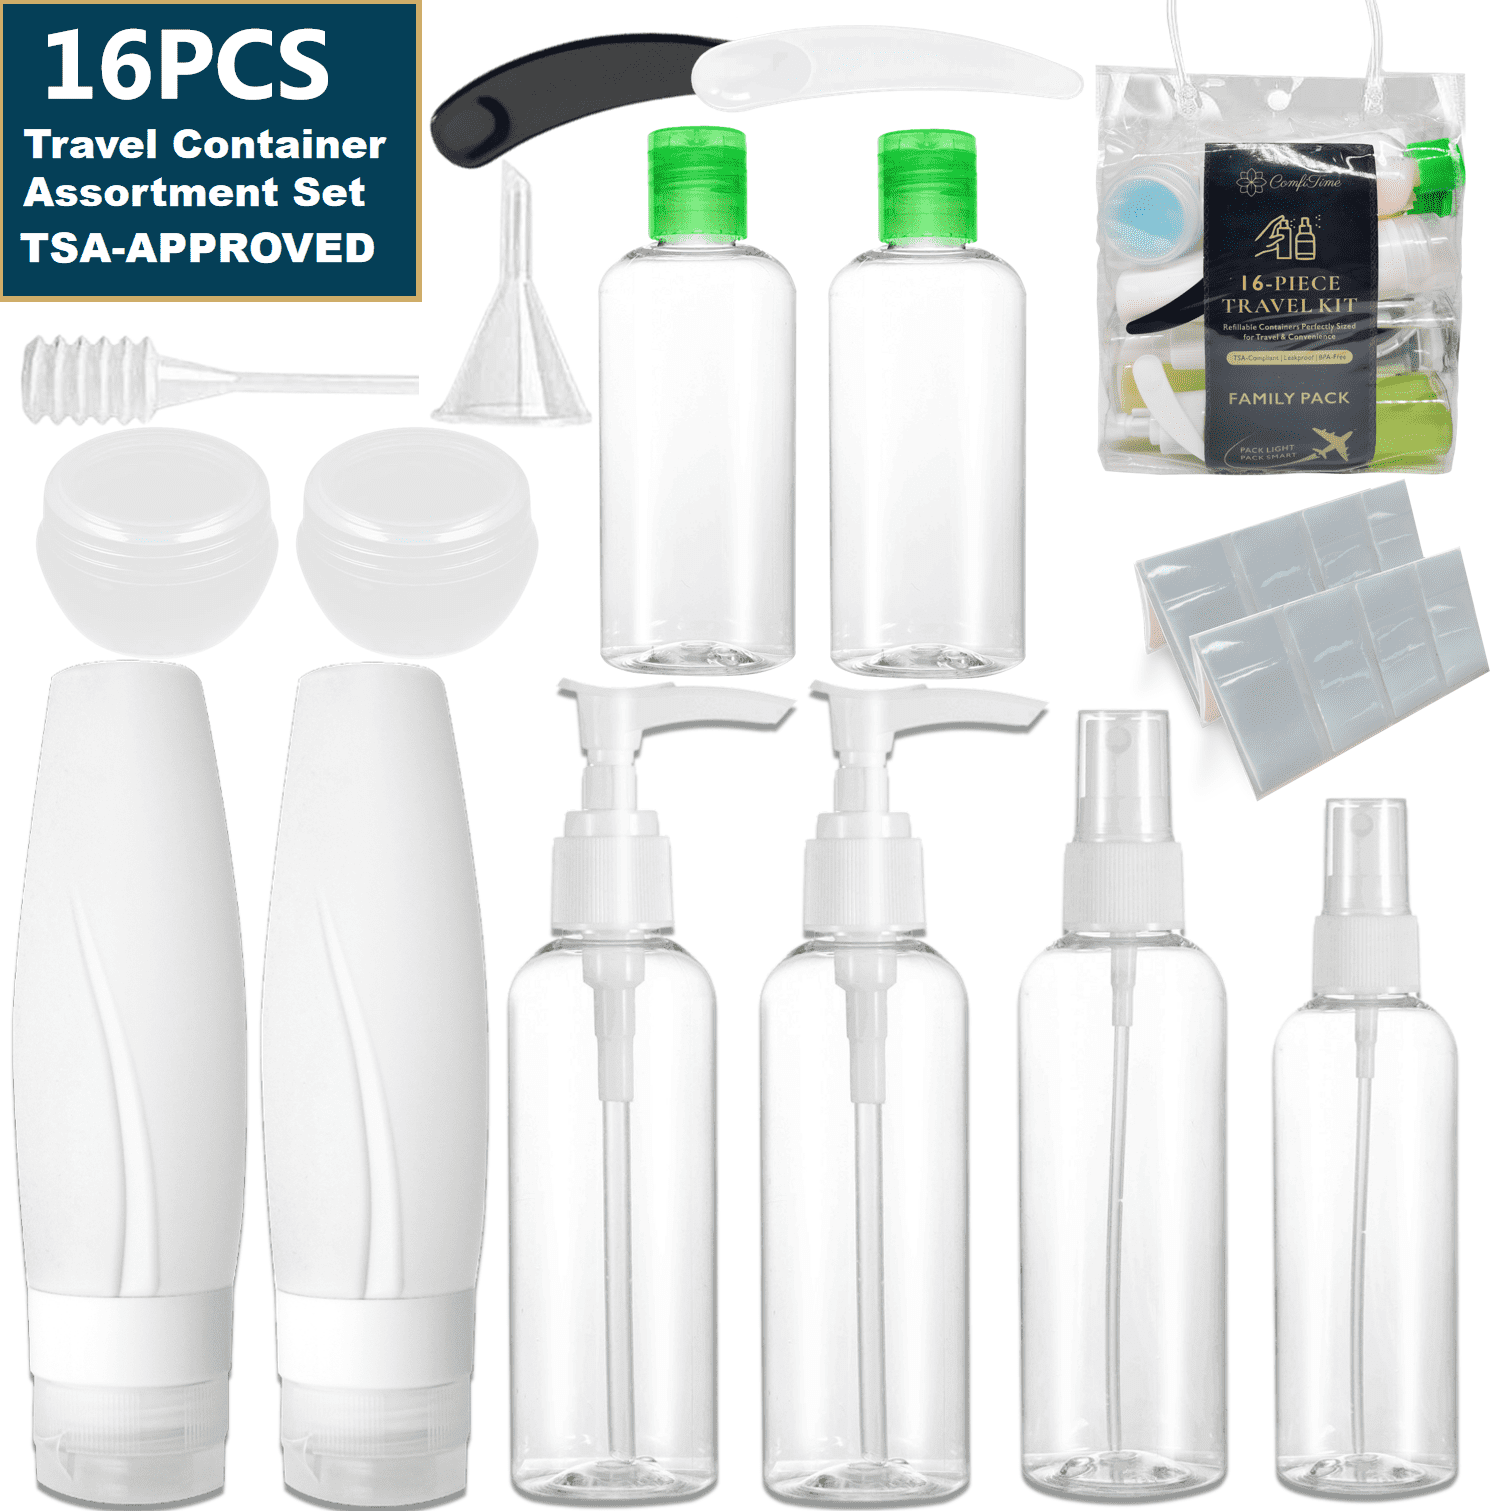 INSFIT Silicone Travel Bottles Set, 17 Pcs Travel Size Toiletries